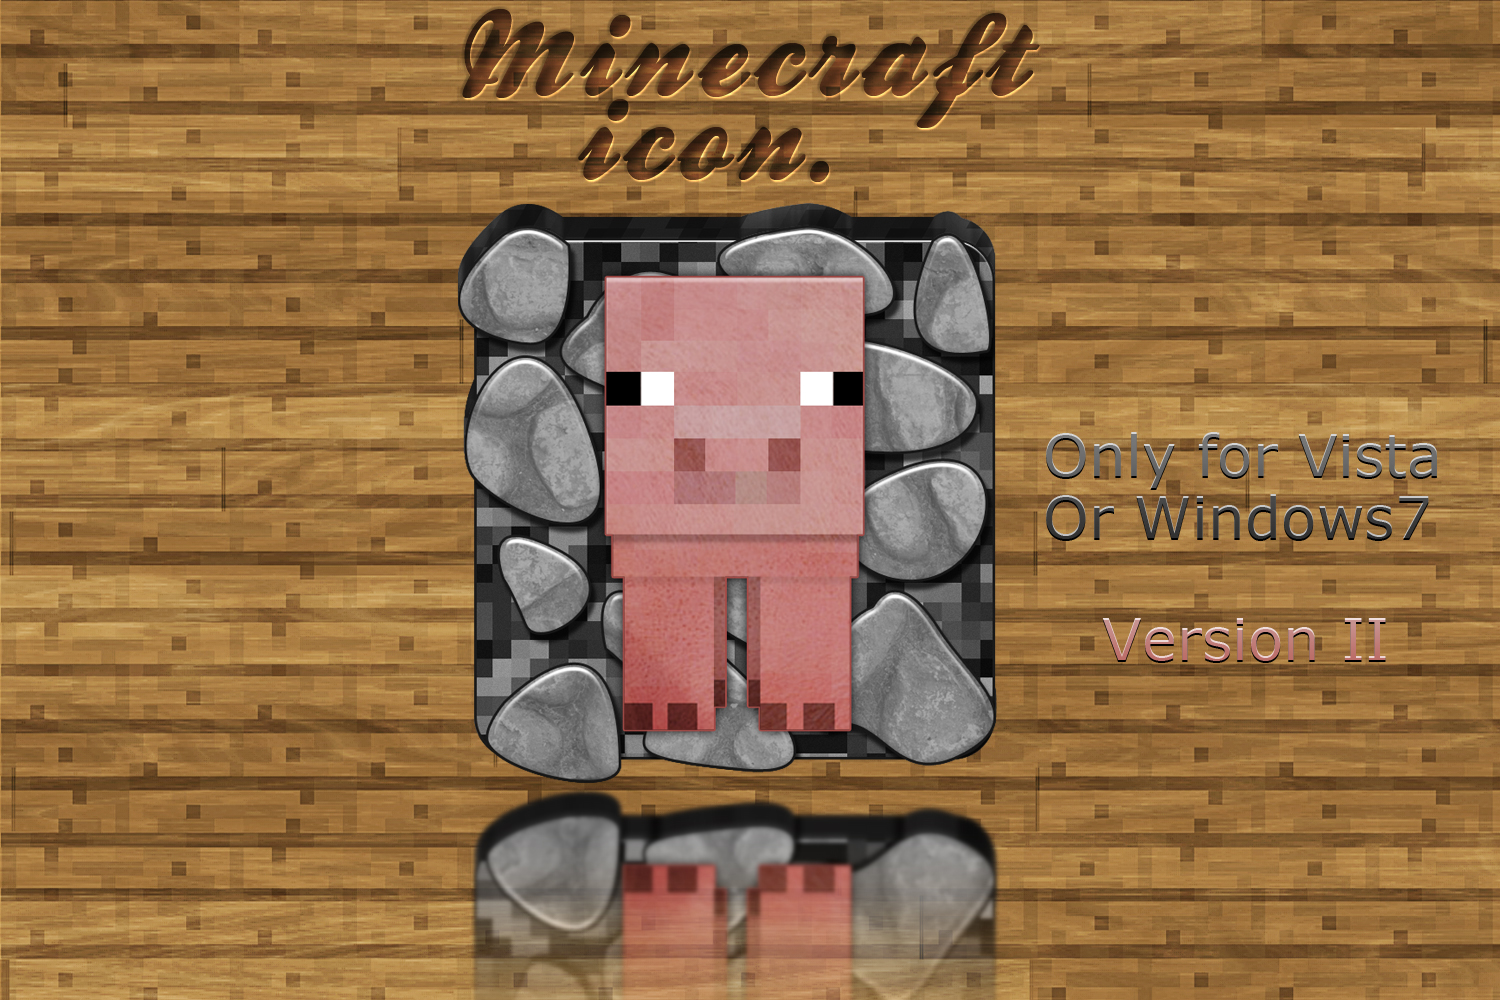 Minecraft Icon, Version. II